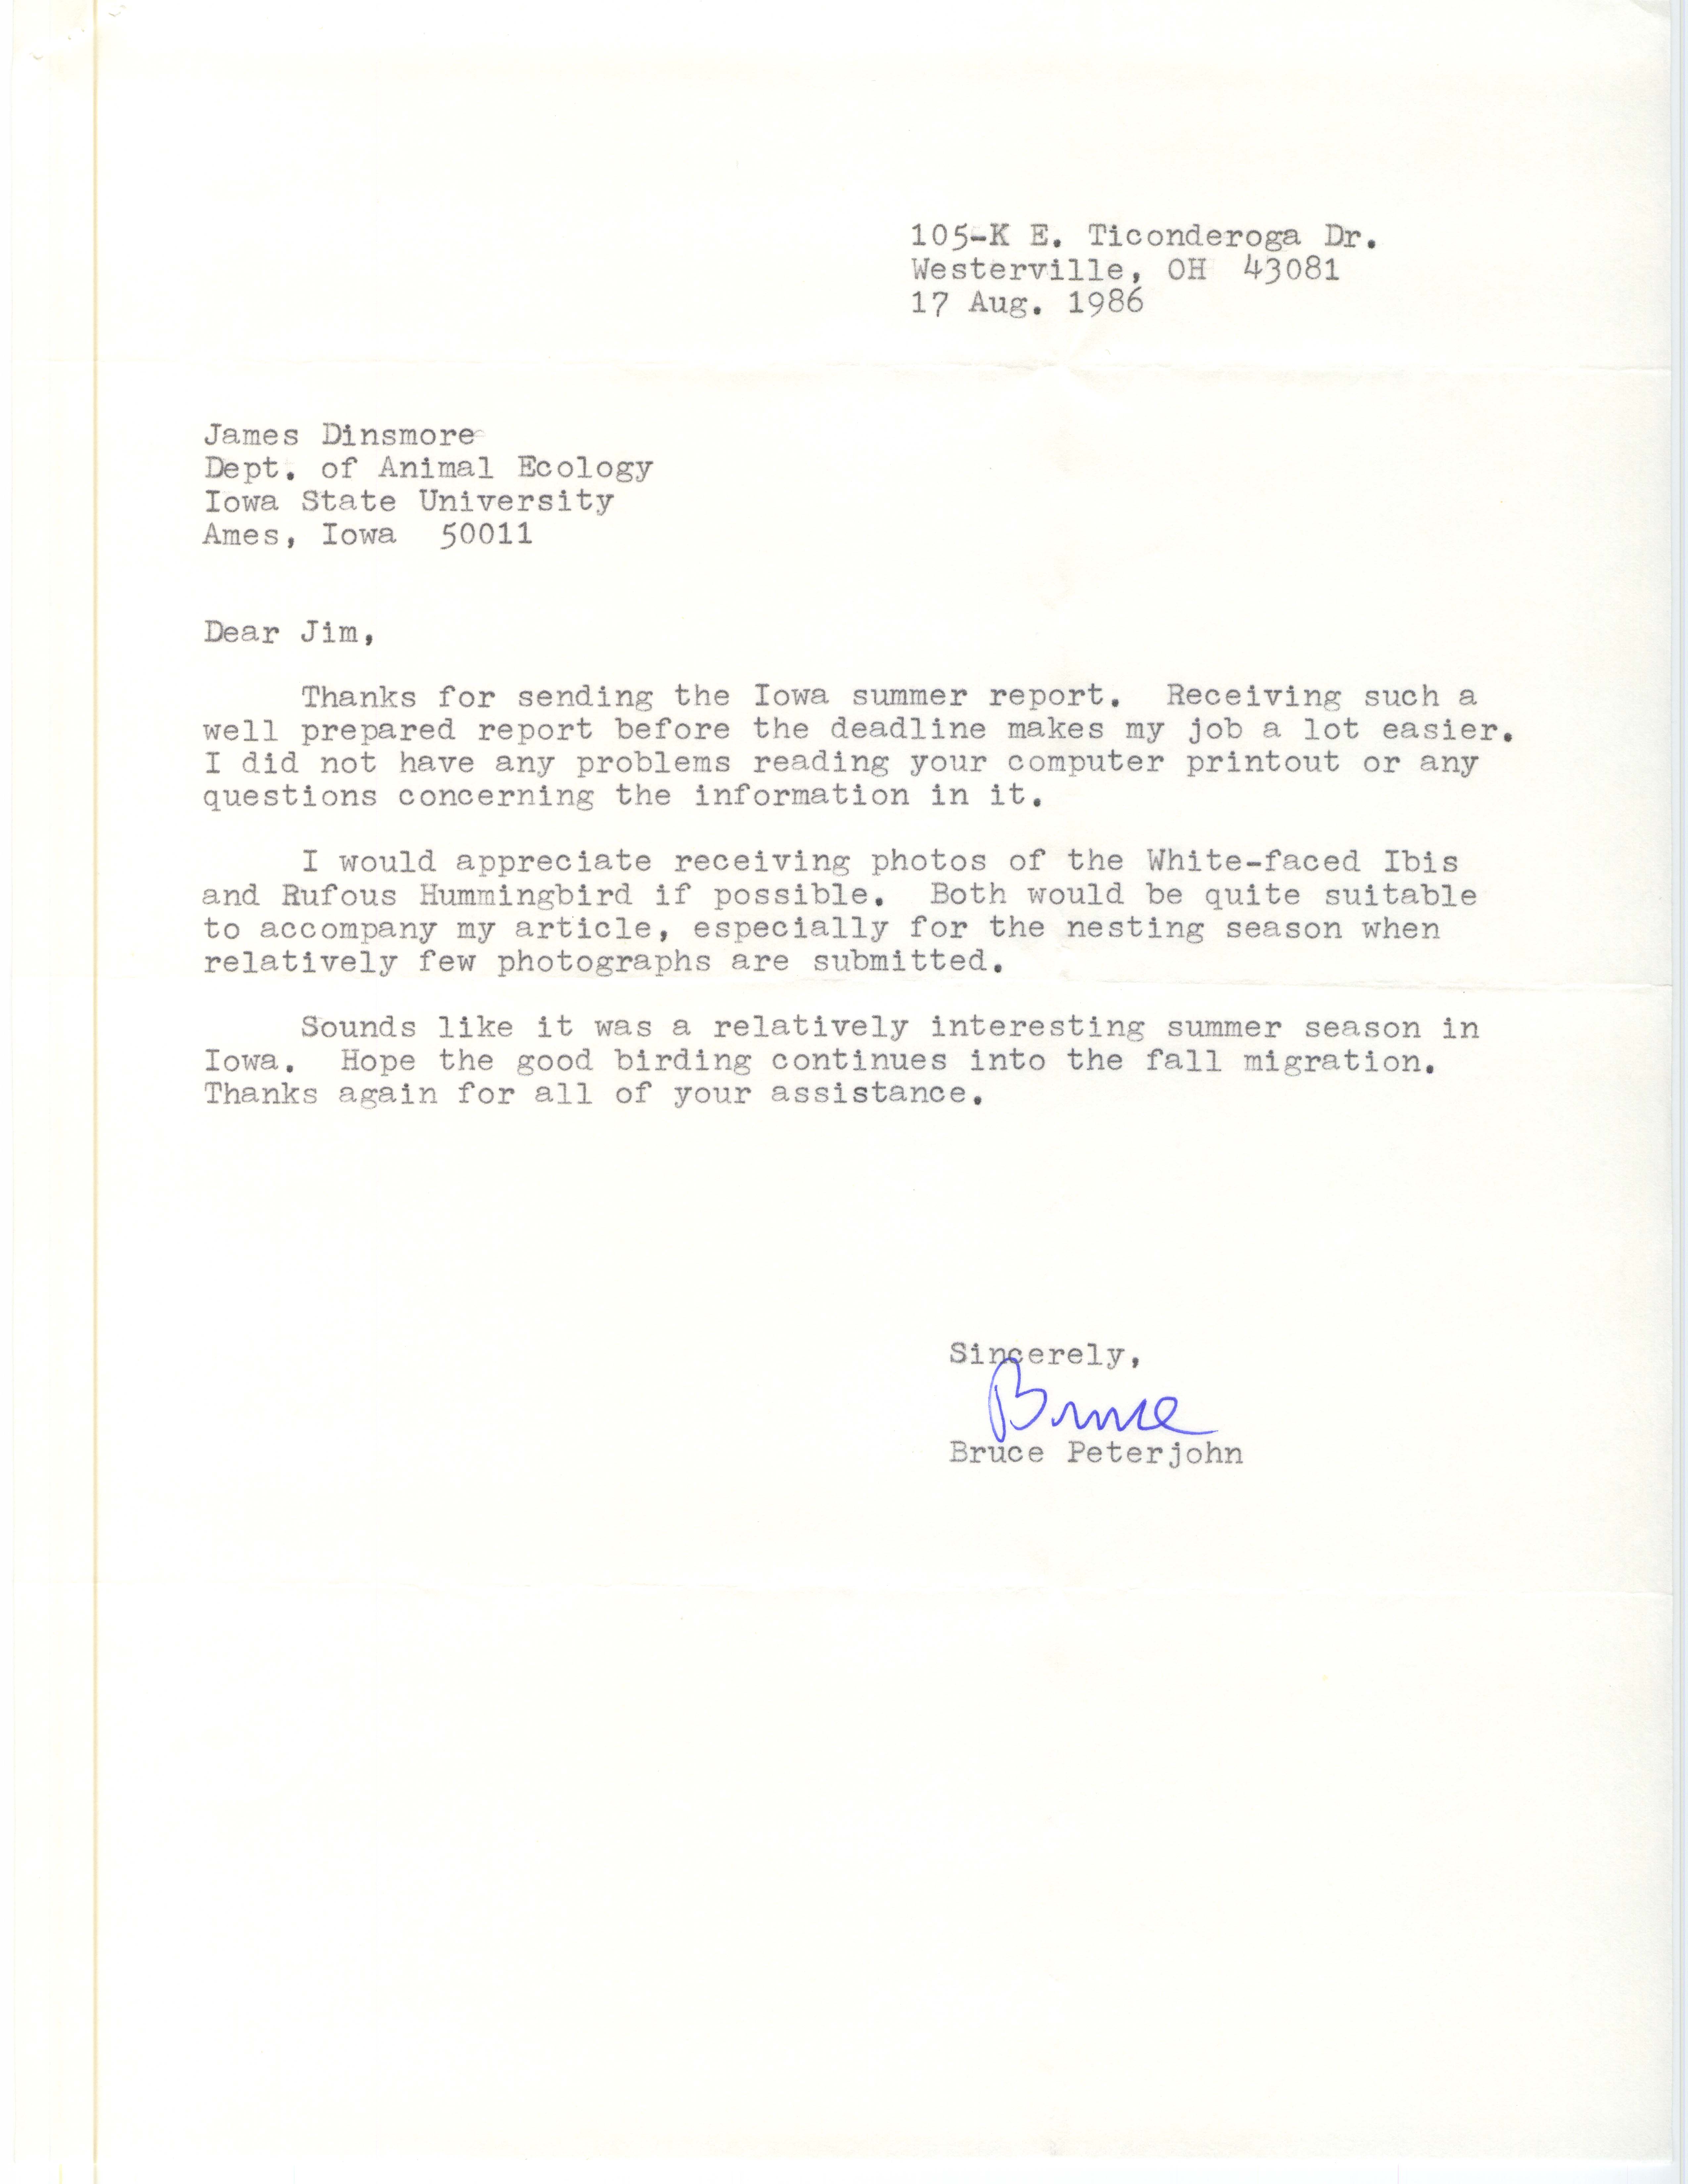 Bruce G. Peterjohn letter to James J. Dinsmore regarding bird reports, August 17, 1986